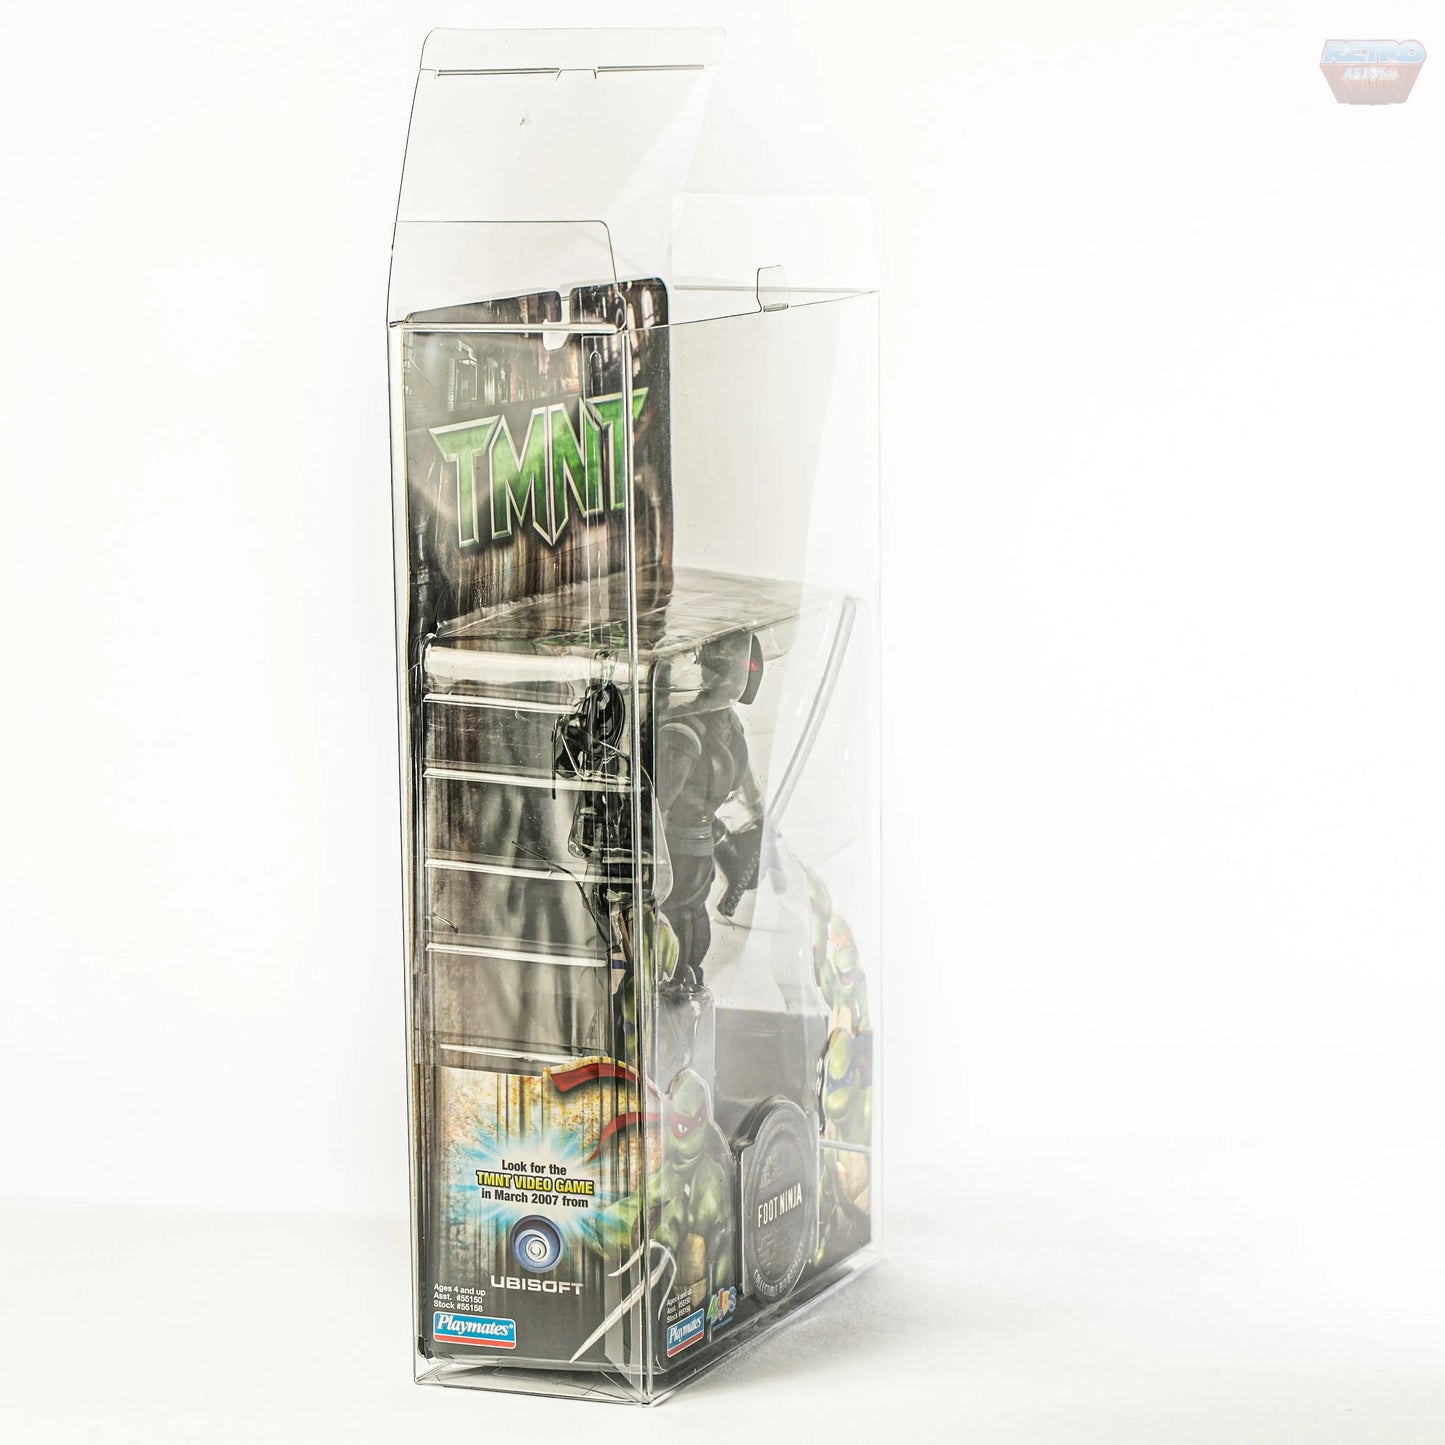 TMNT 2007 CGI Animated Movie Protector Box 10-Pack Retro As F